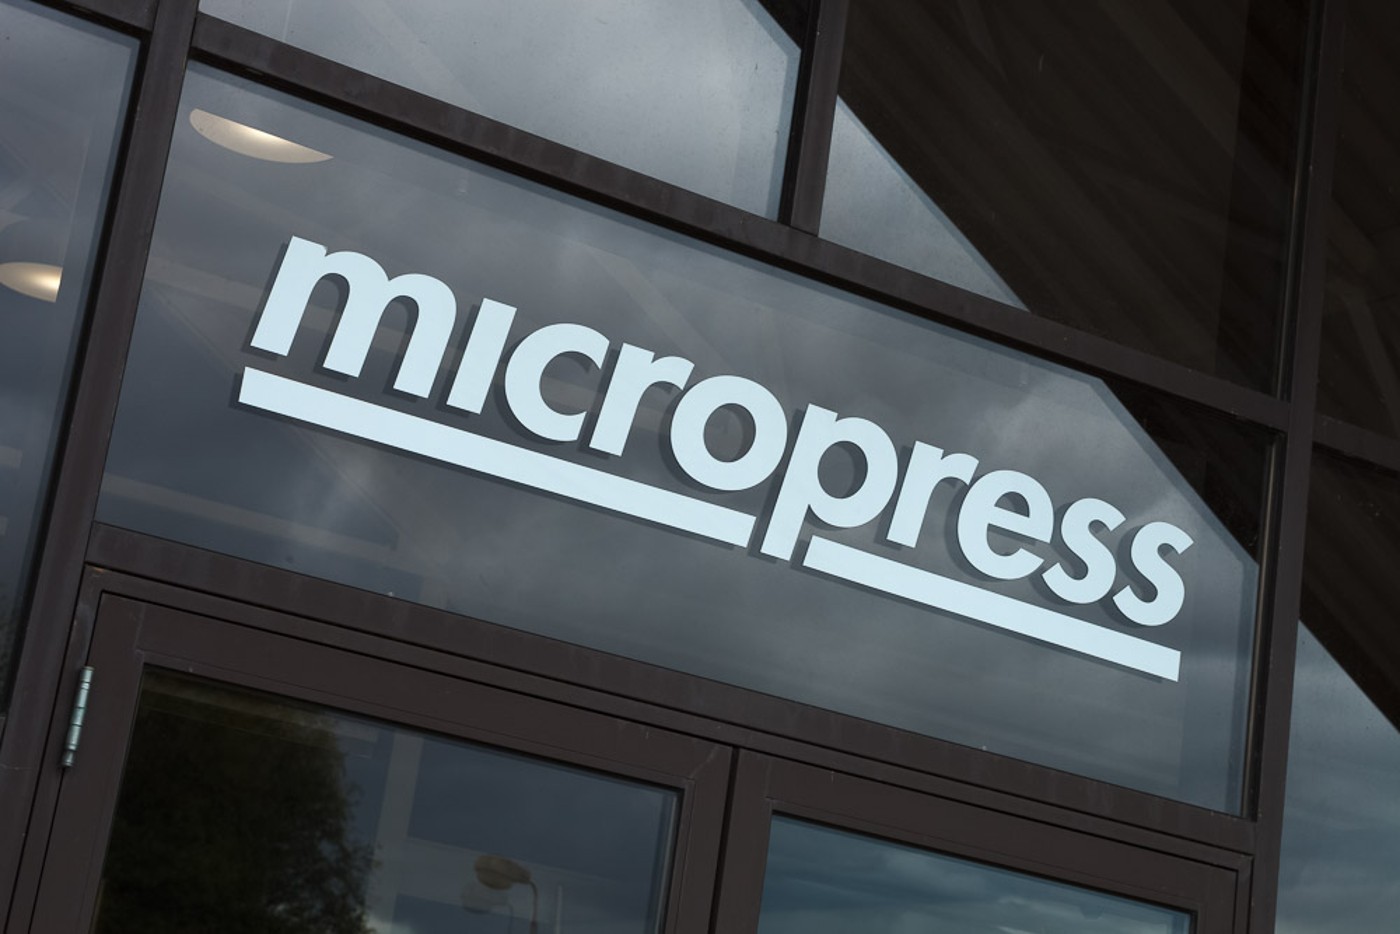 Micropress_signage